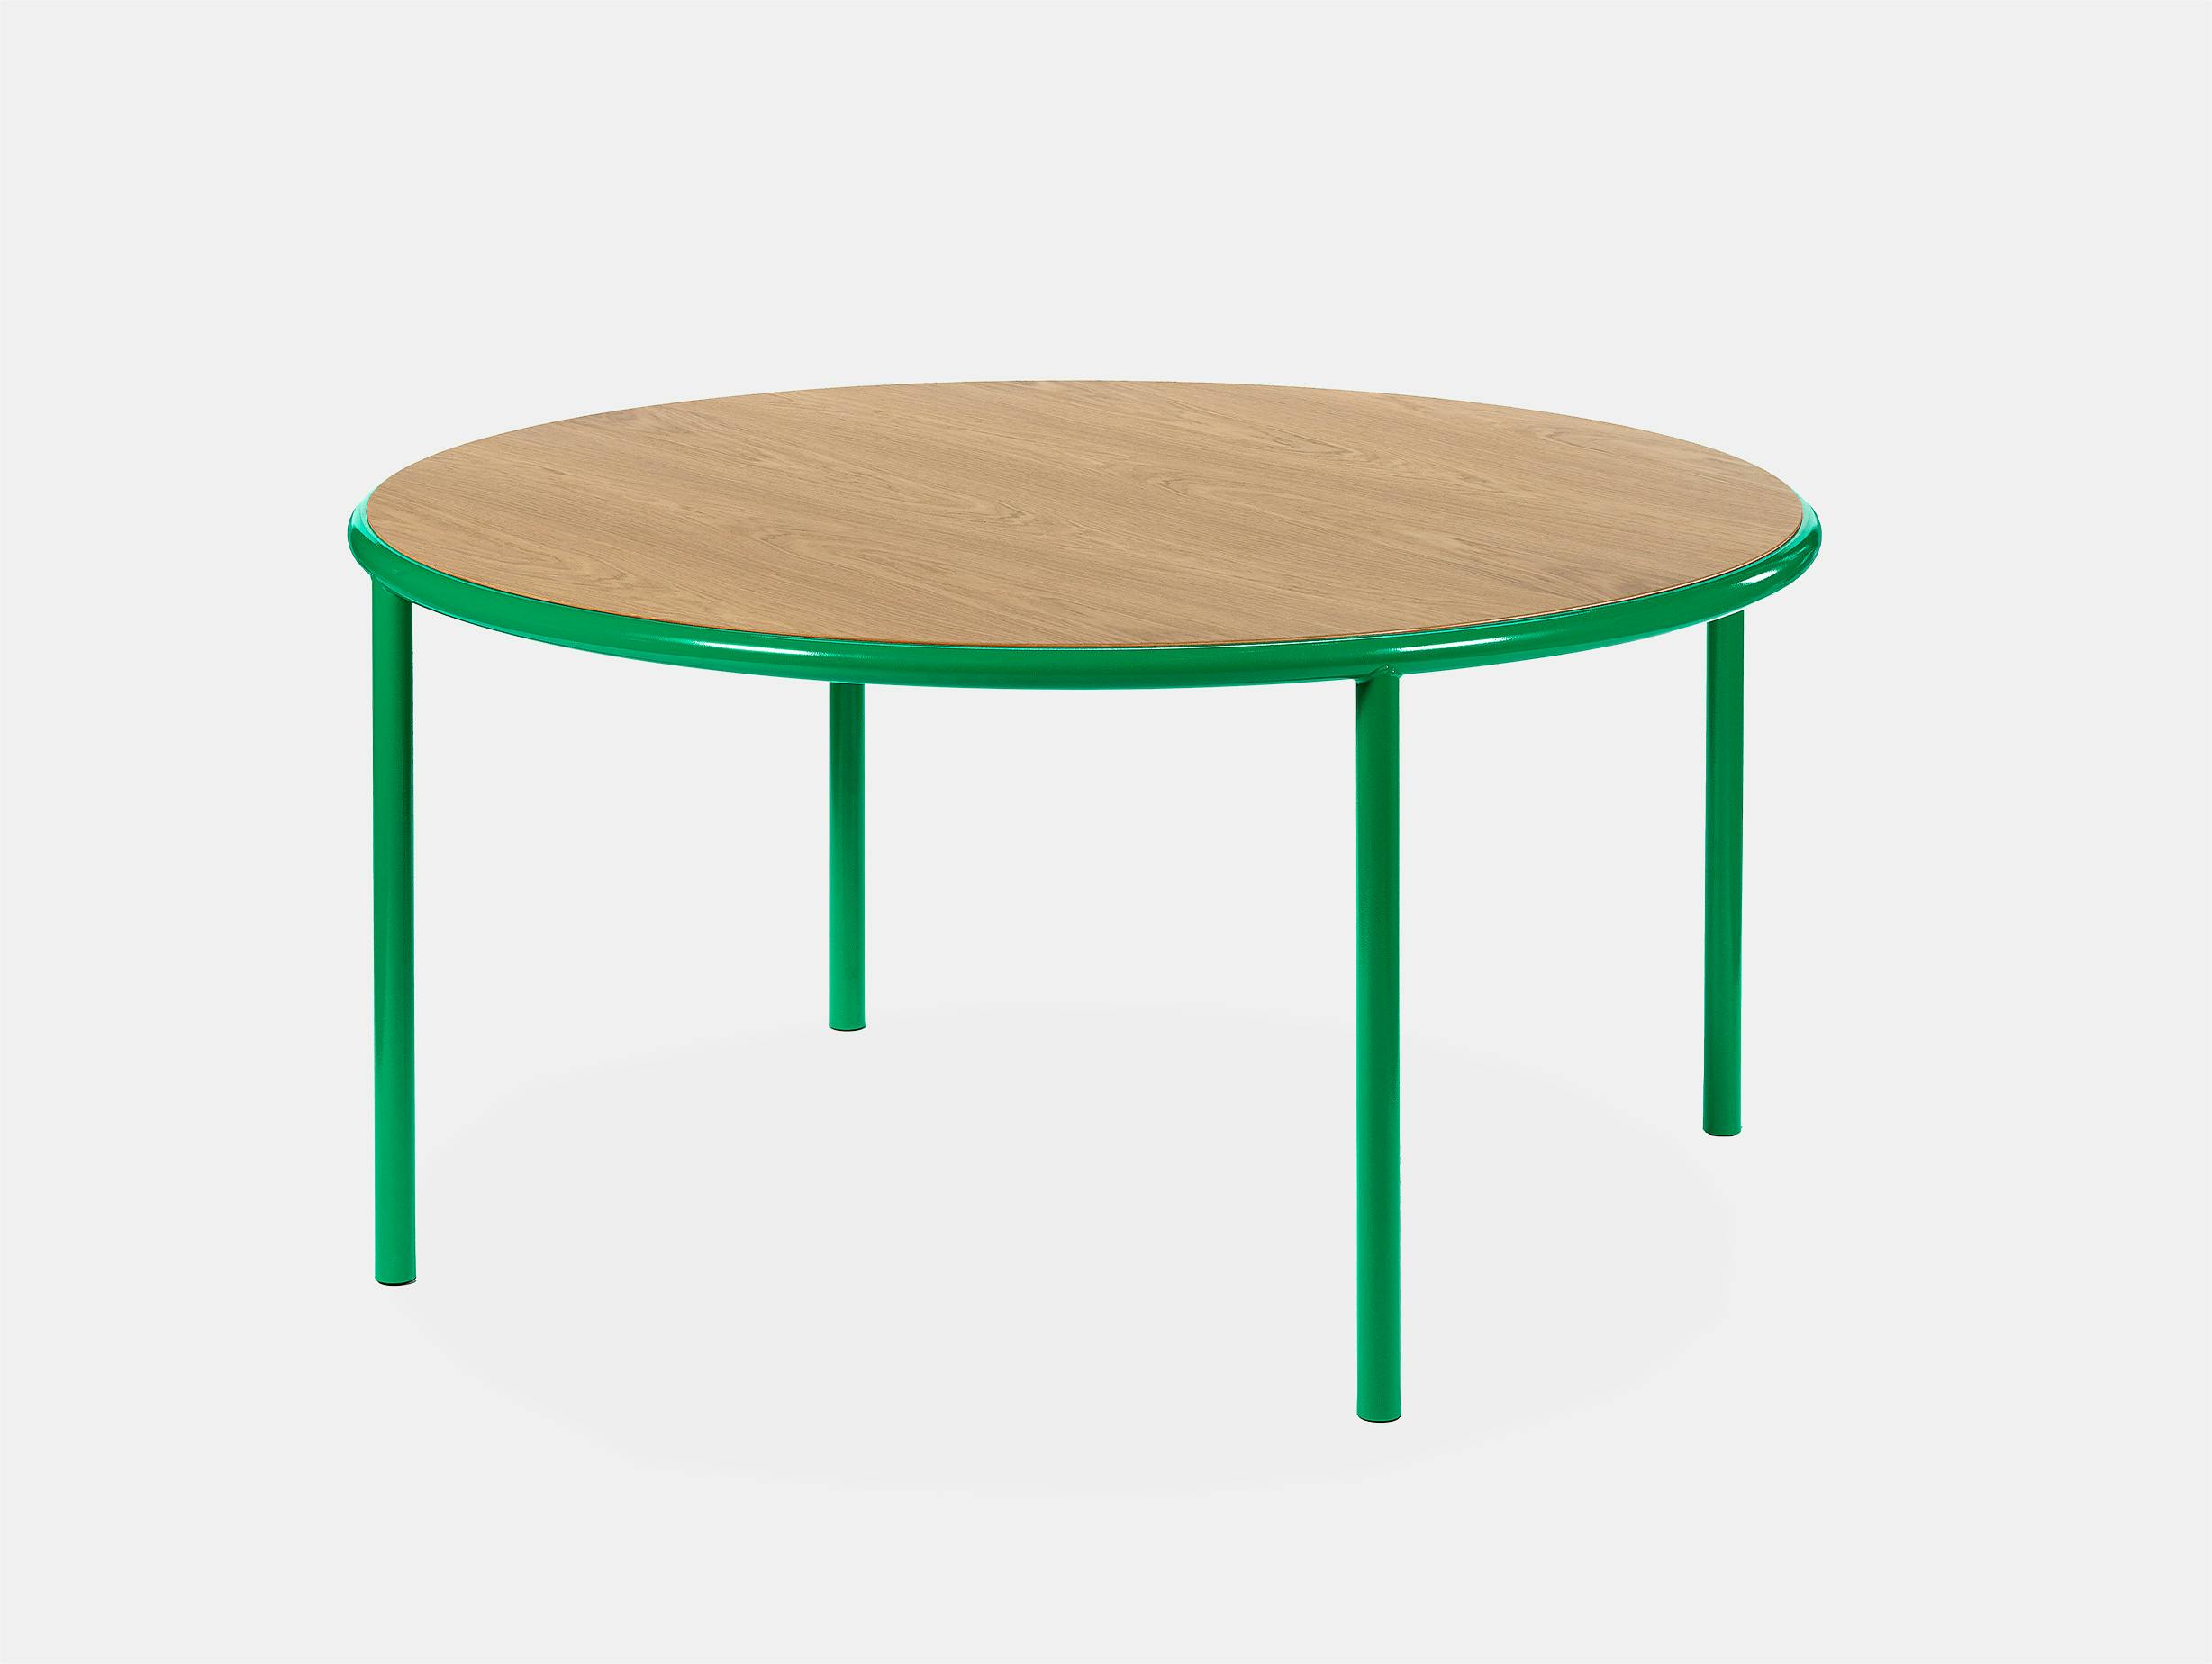 Muller van severen wooden table large round green oak